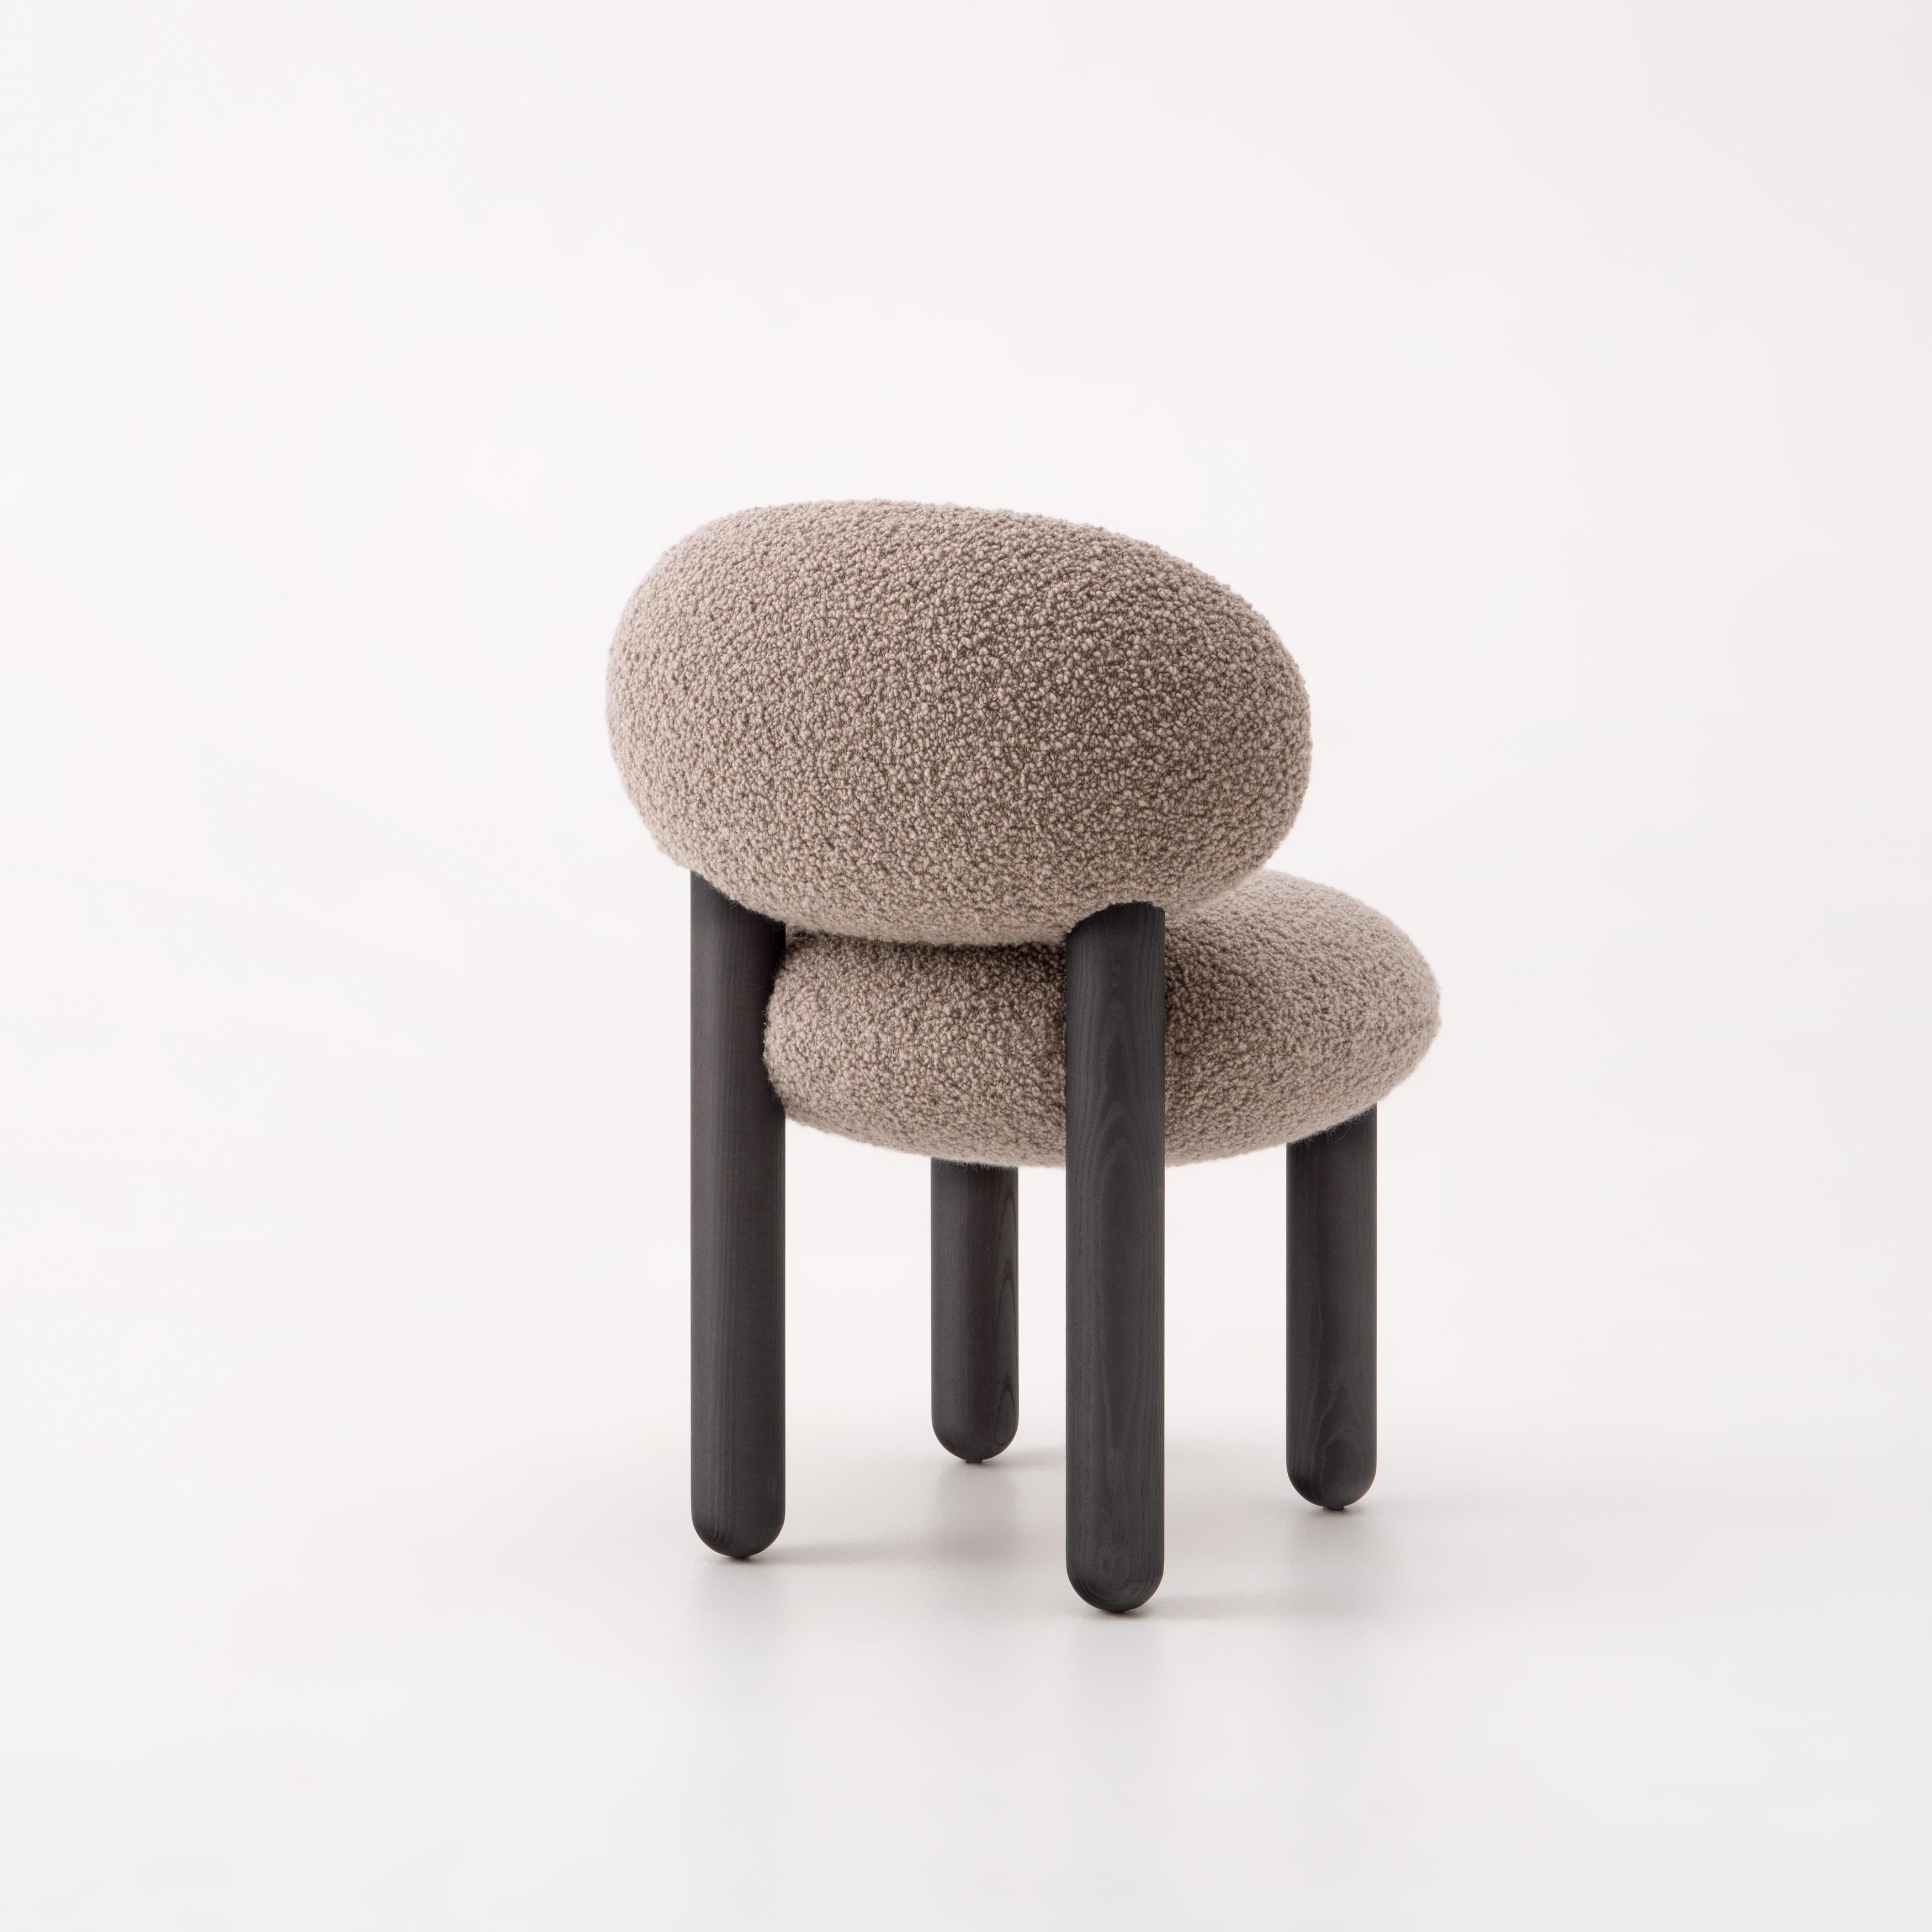 Dining Chair Flock CS2
Designer: Kateryna Sokolova for Noom

Model shown in the main pictures: 
Legs: black stained ashwood
Upholstery: Dedar, Nimbus col.03

The 